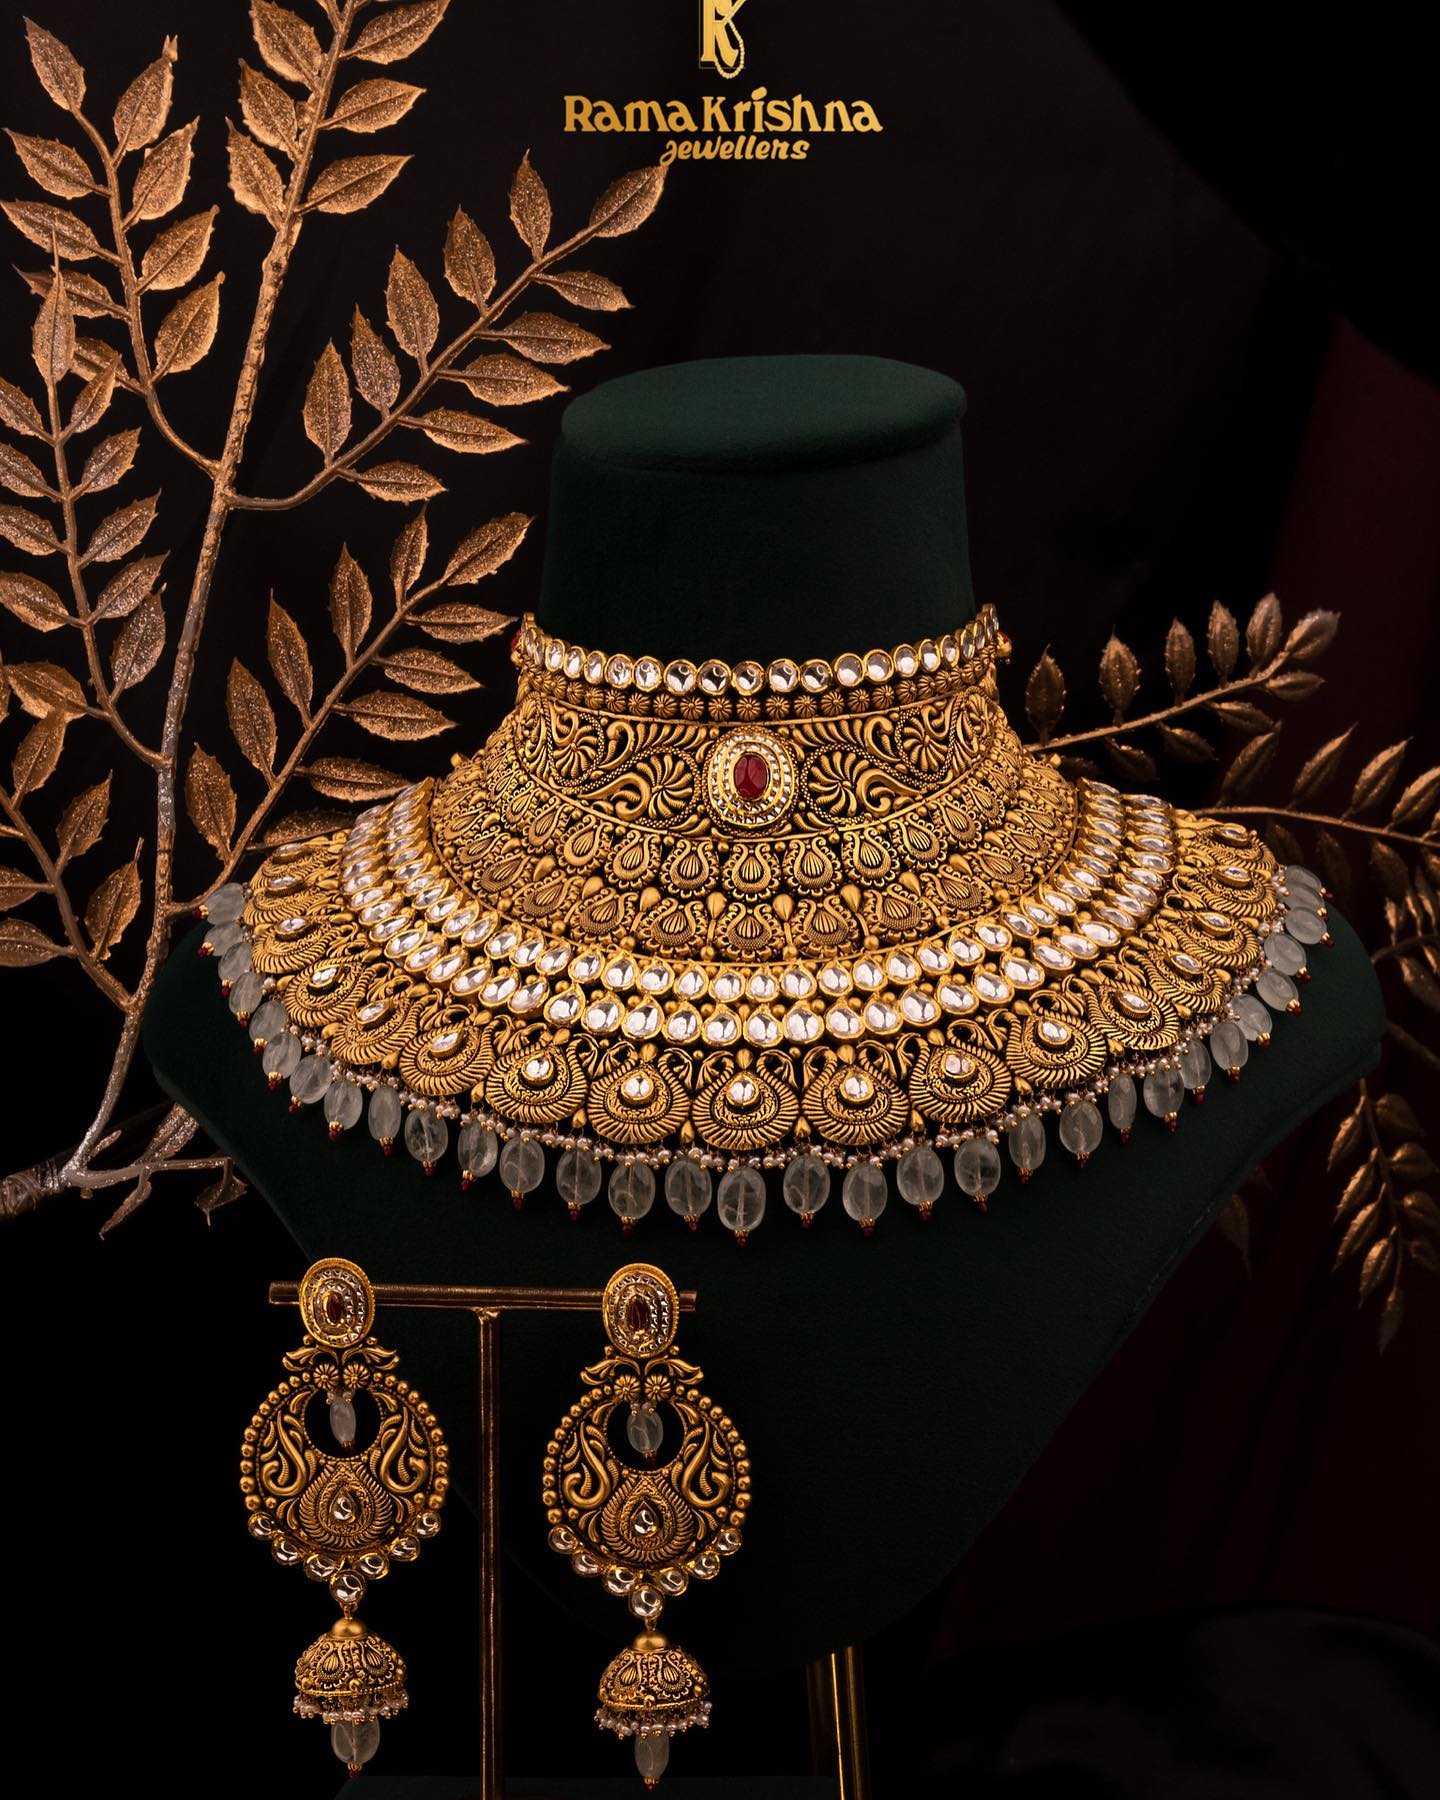 Rama krishna jewellers review